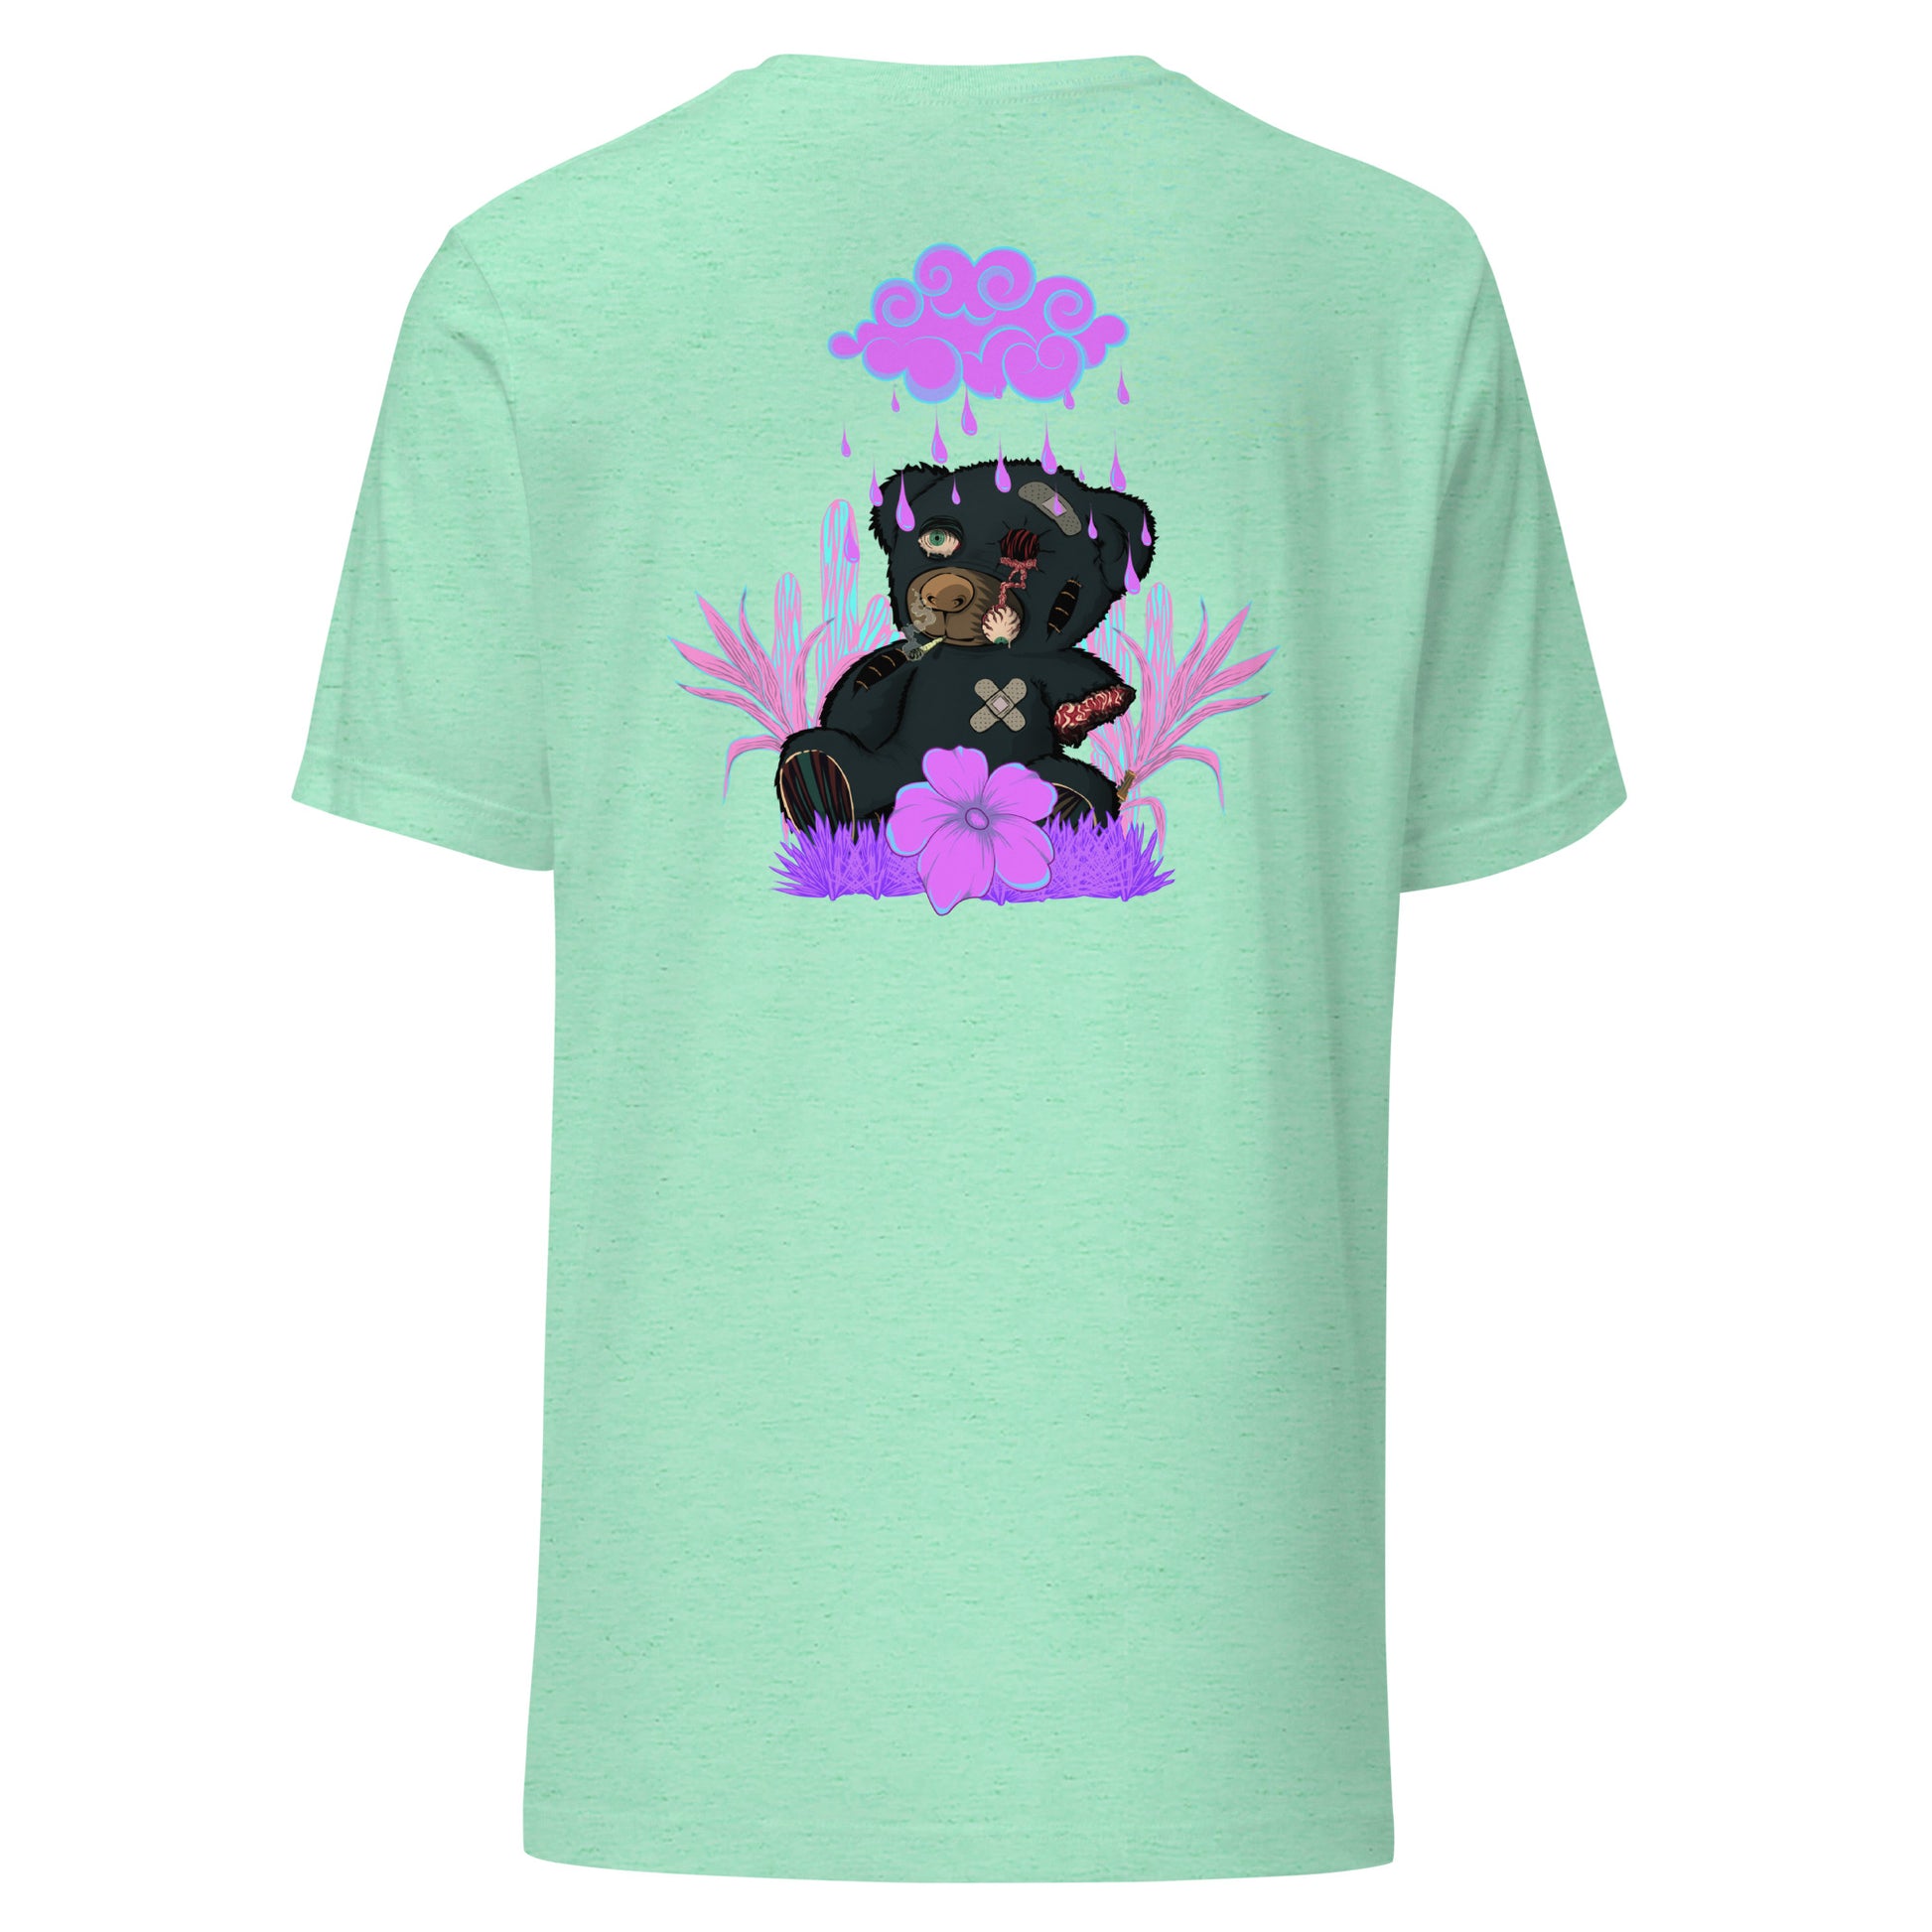 T-Shirt trasher not for kids effet néon weed et motif floral t-shirt de face unisex couleur vert menthe